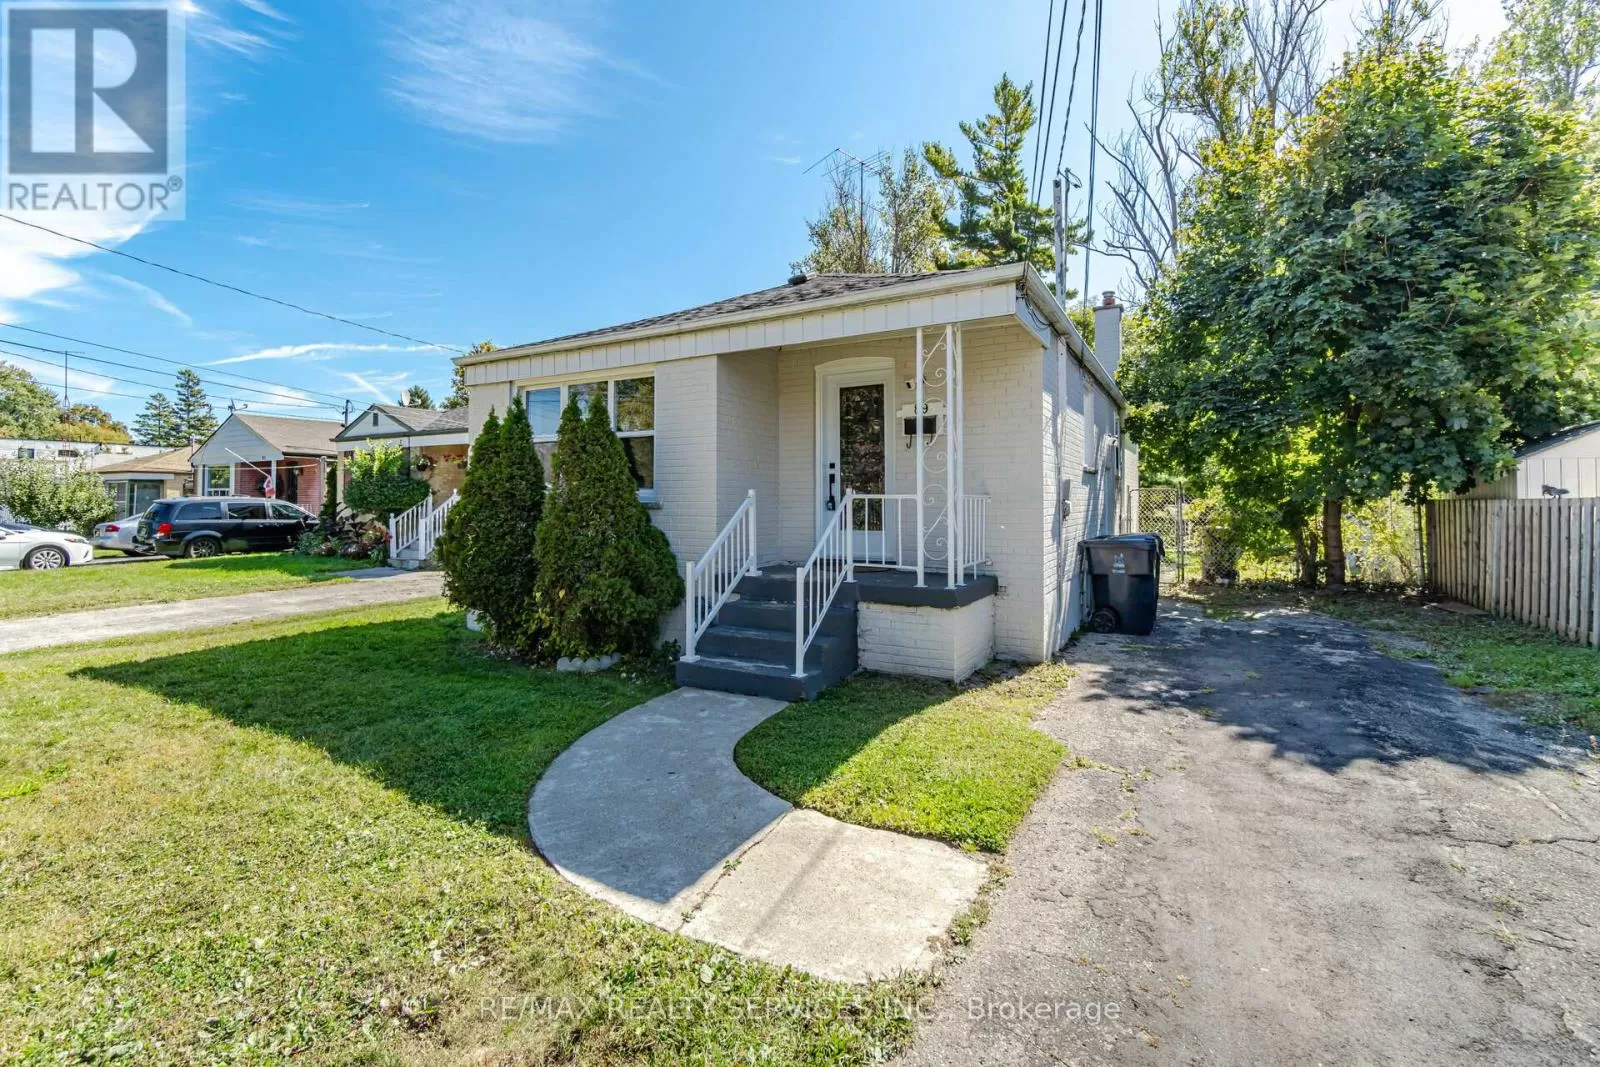 House for rent: 89 Darlingside Drive, Toronto, Ontario M1E 3P2